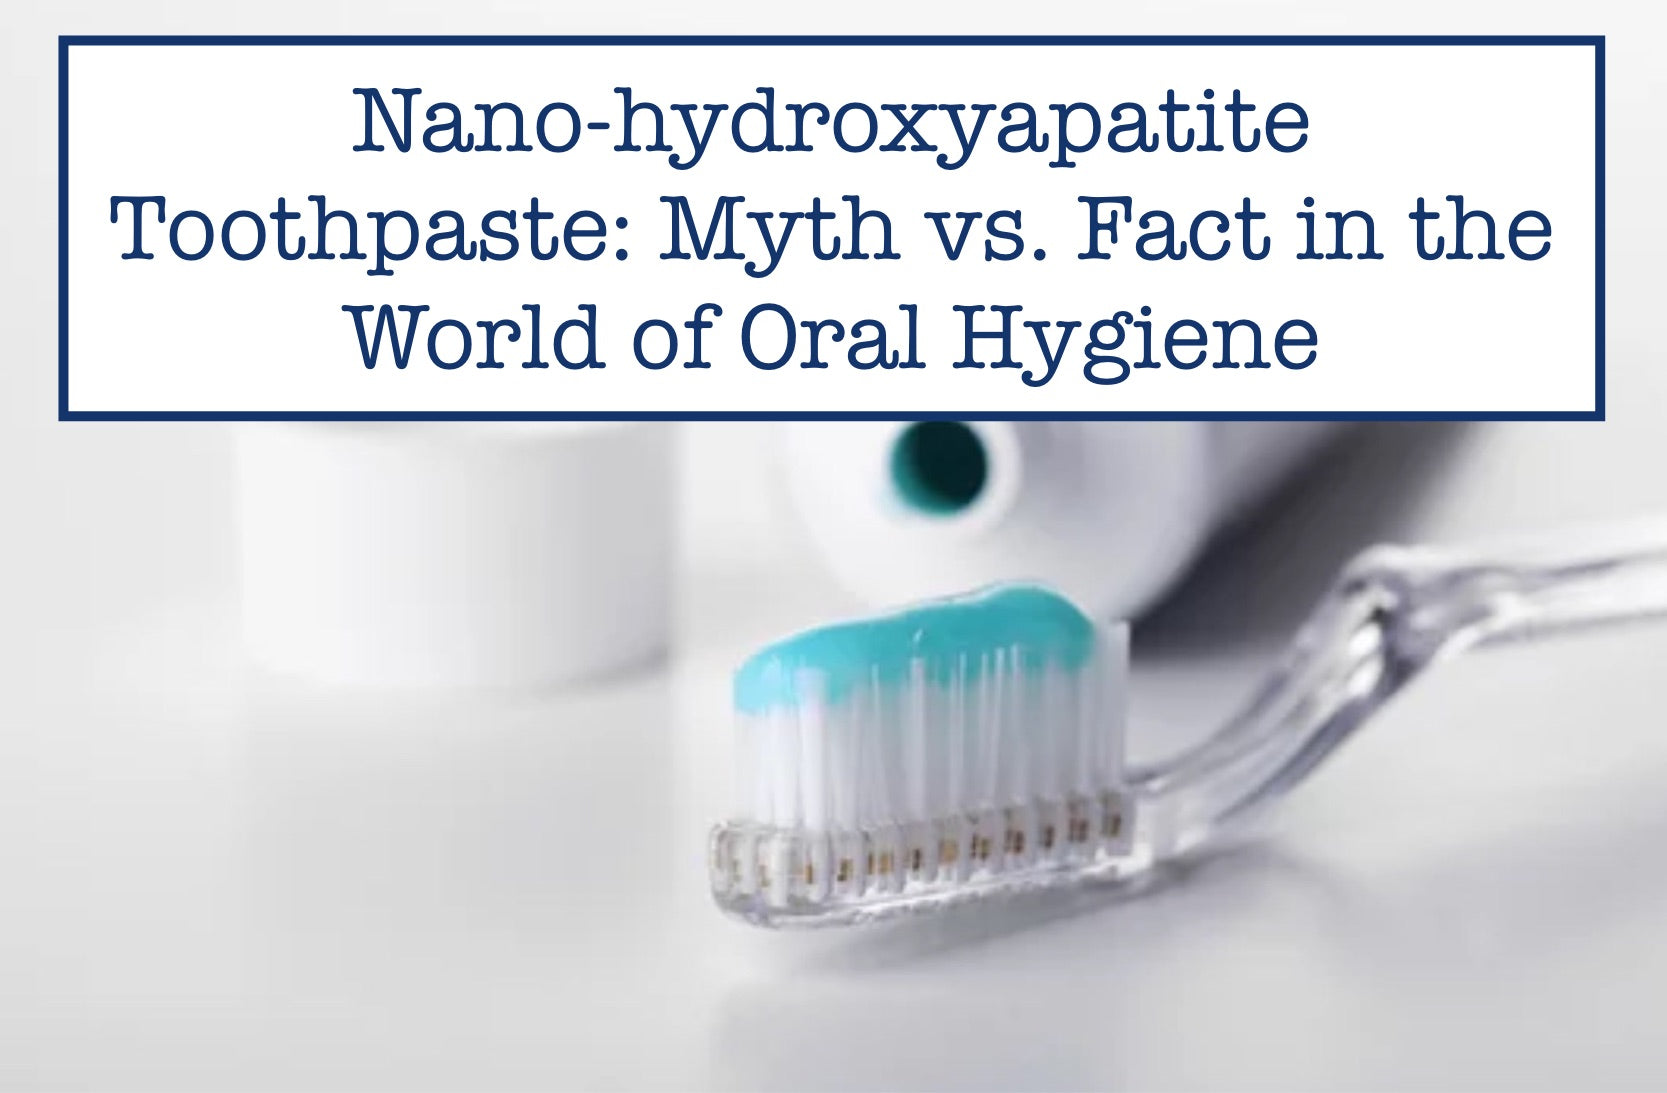 Nano-hydroxyapatite Toothpaste: Myth vs. Fact in the World of Oral Hygiene